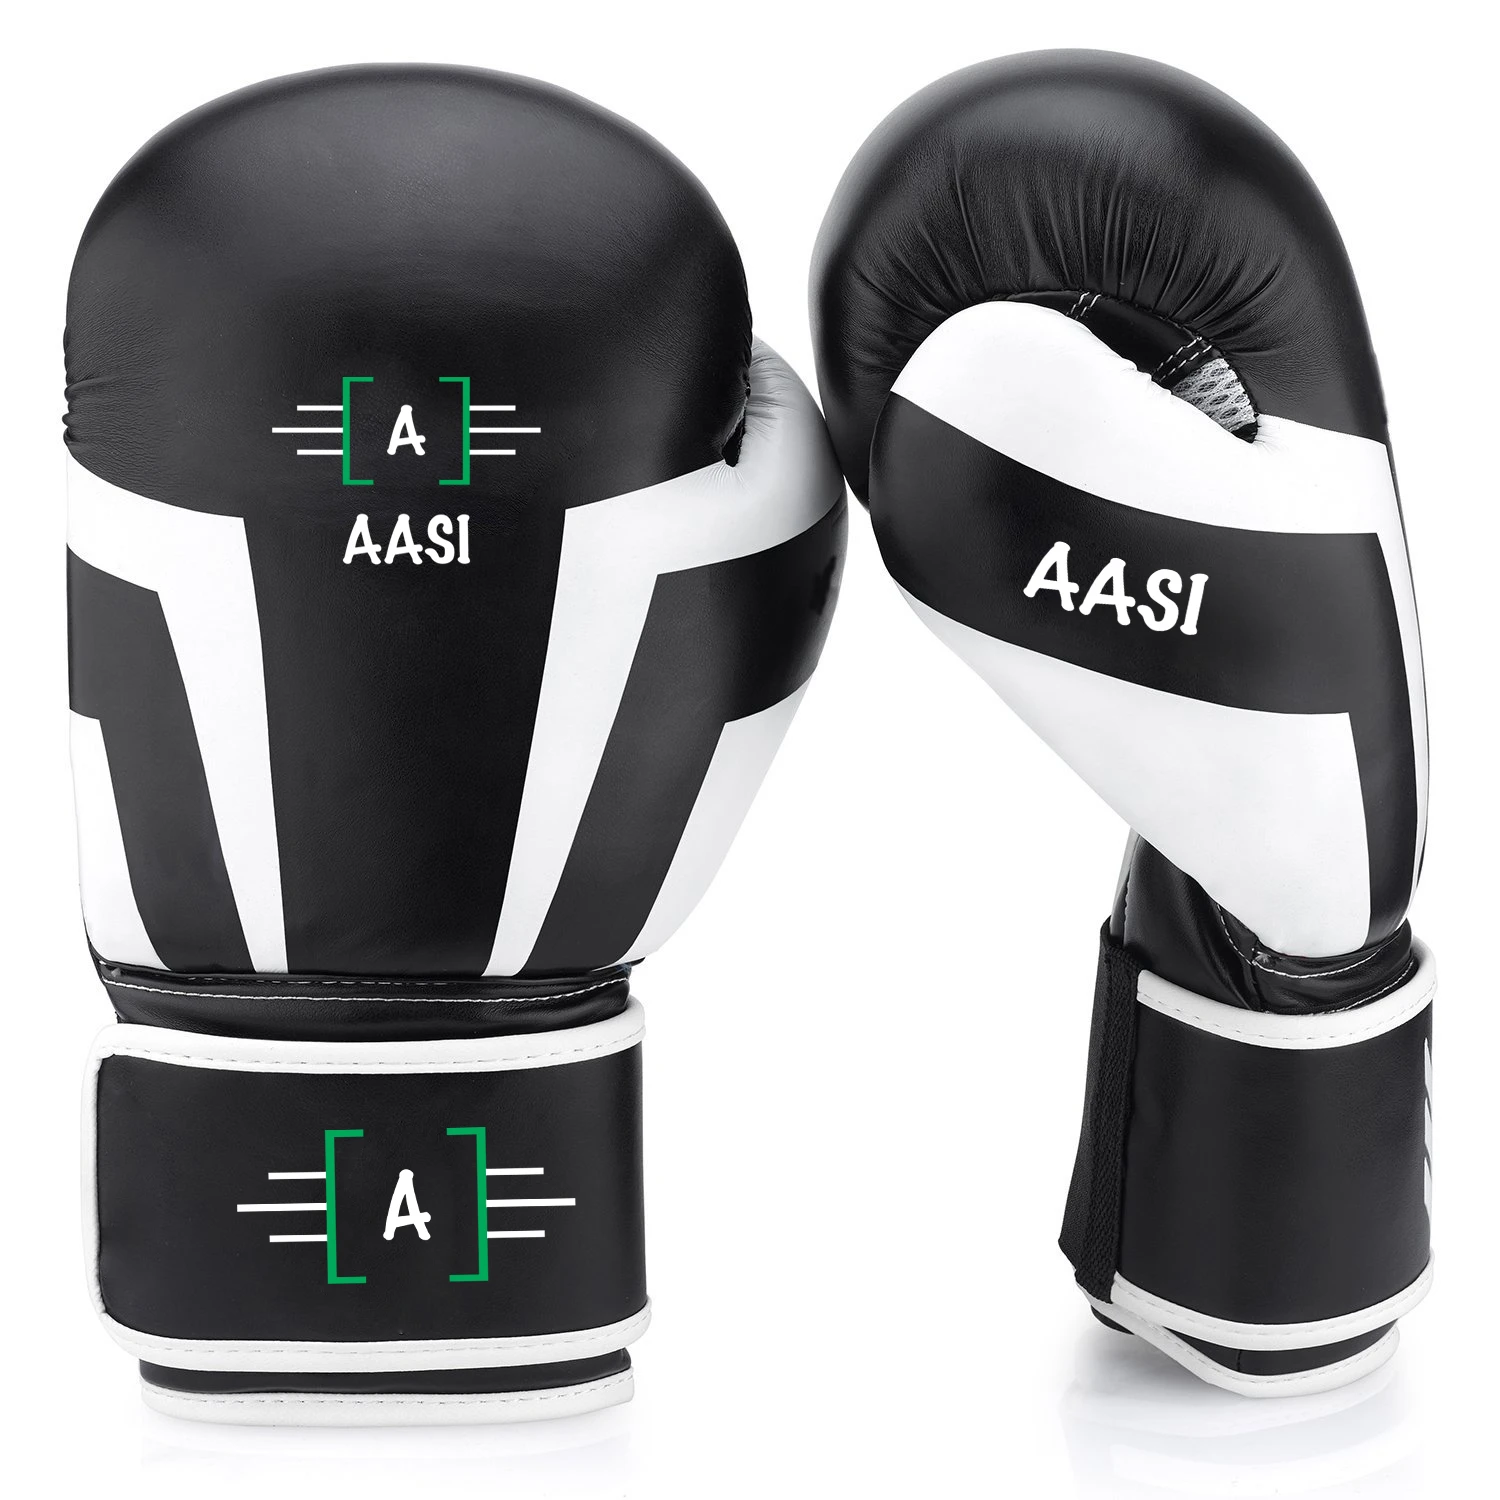 New Style Custom Logo Pu Leather Boxing Glove Muay Thai Punching Gloves